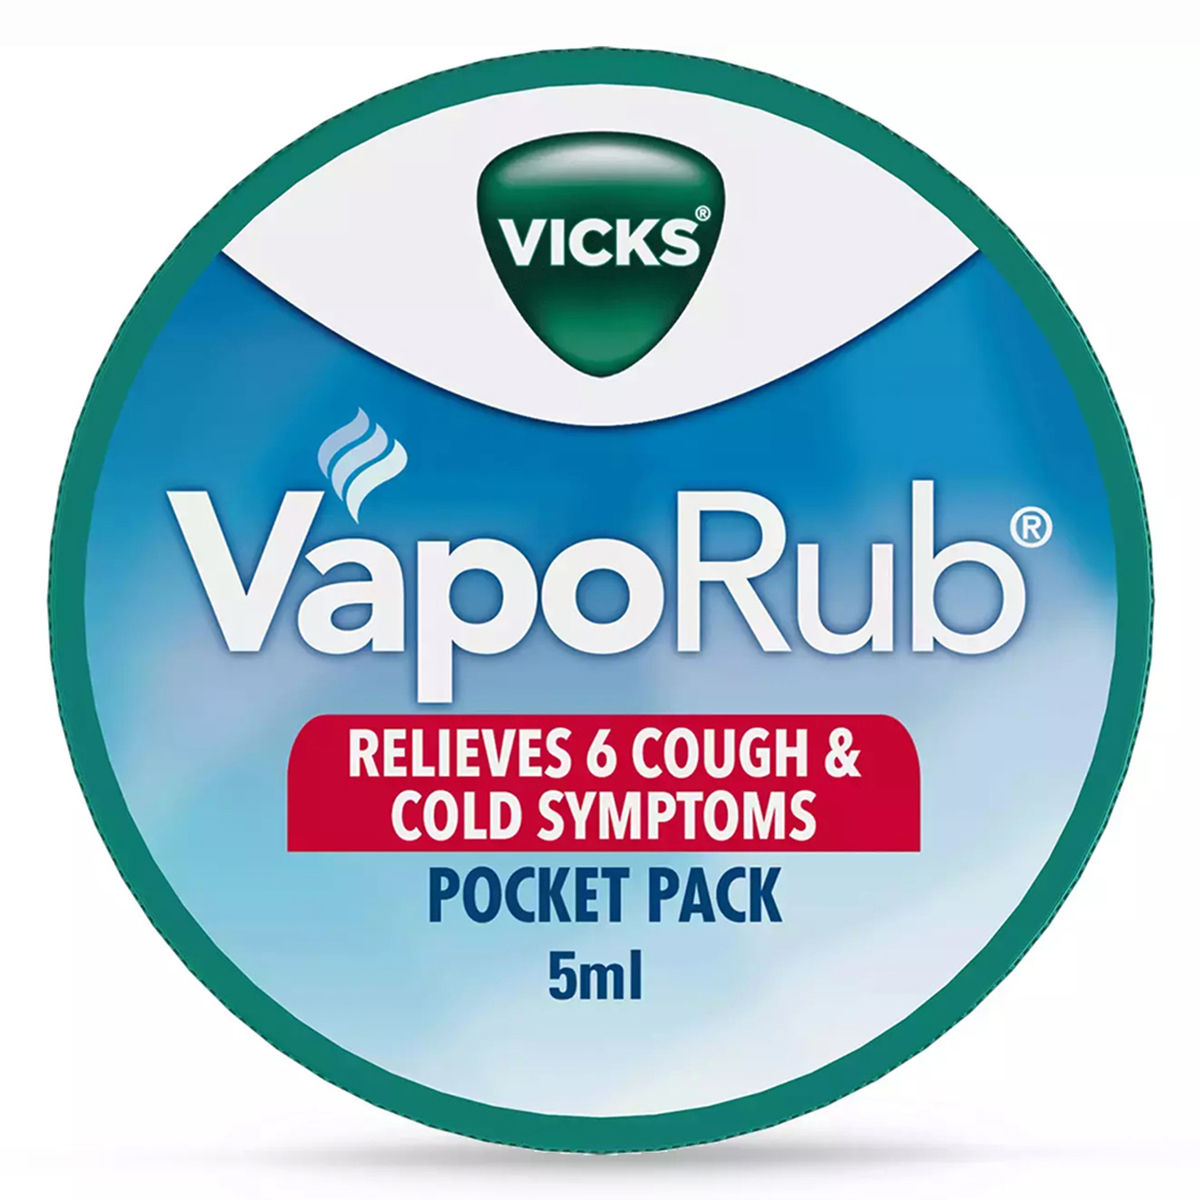 Vicks Vaporub, 5 ml Price, Uses, Side Effects, Composition - Apollo Pharmacy